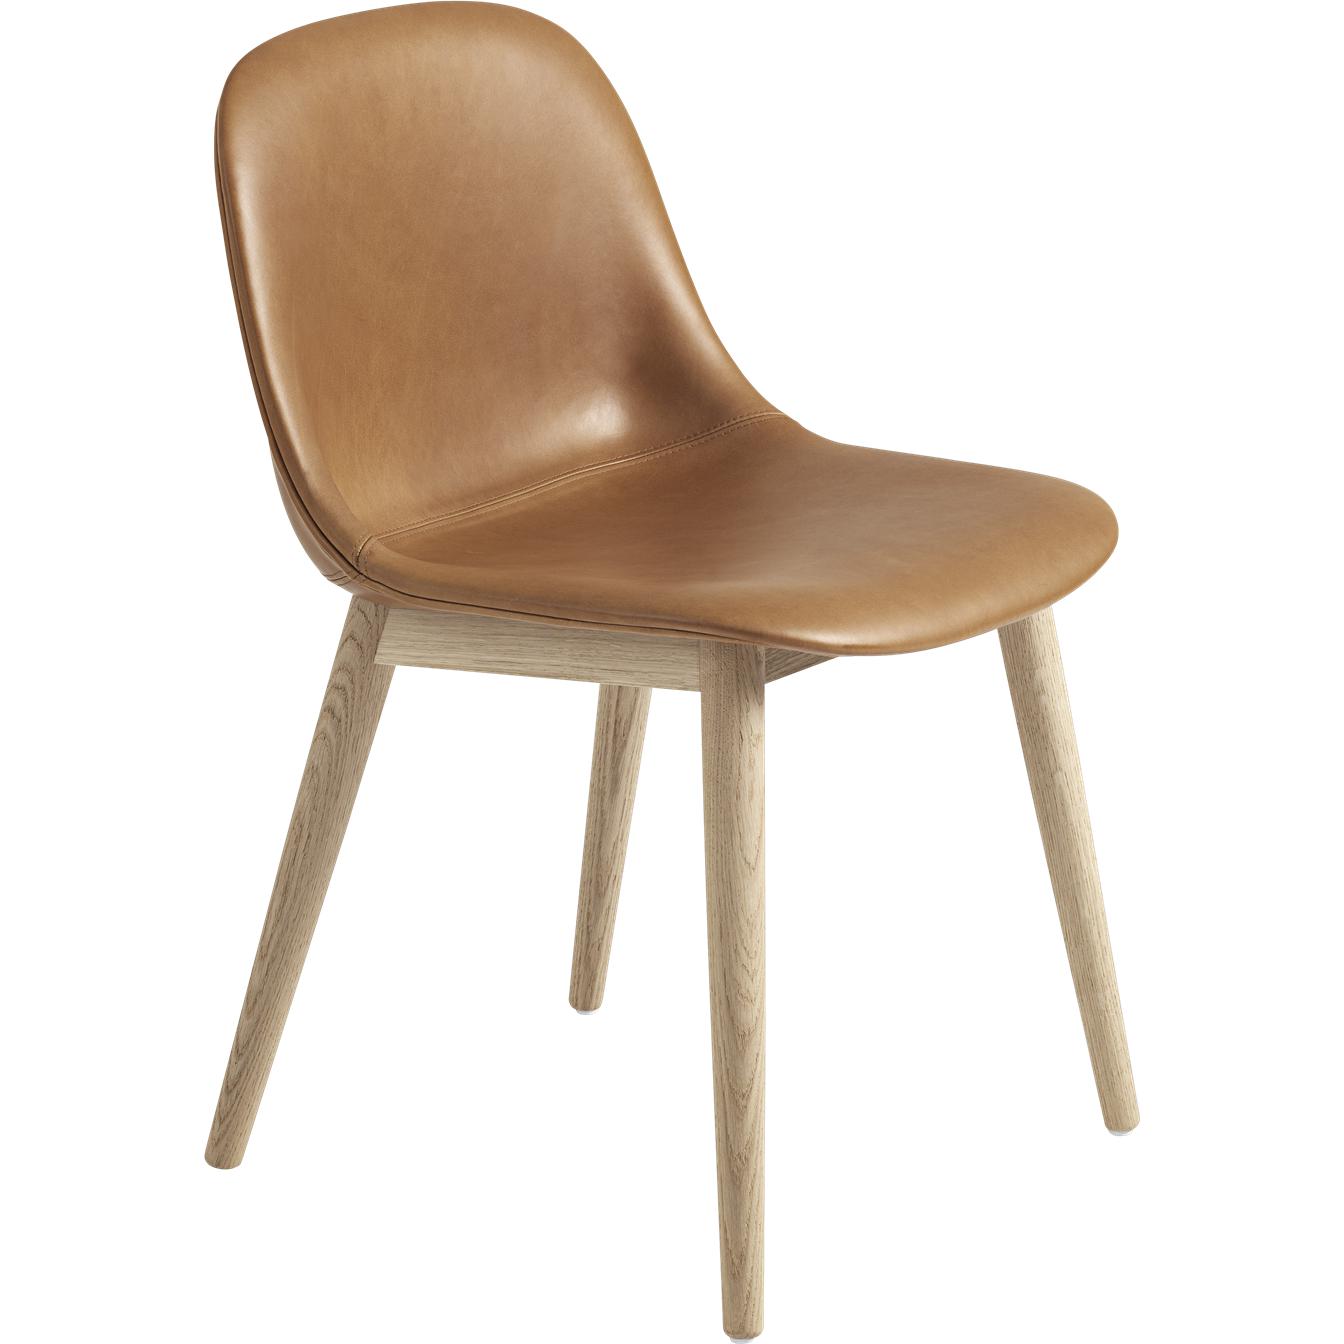 Pernas de madeira de cadeira lateral de fibra muto, assento de couro, couro marrom conhaque